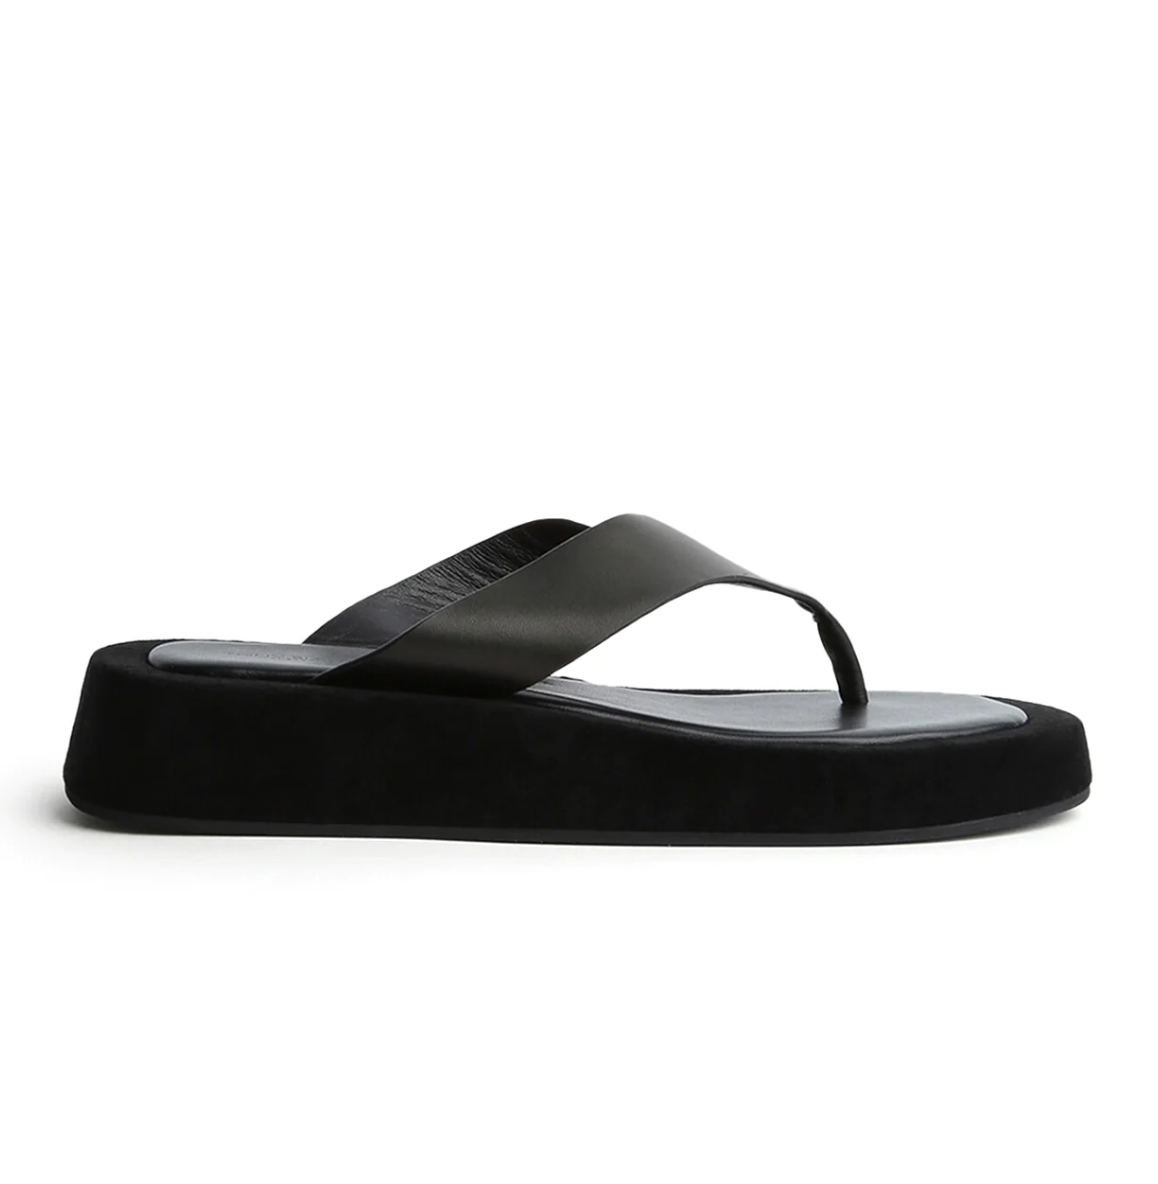 Tony Bianco + Ives Black Como Sandals